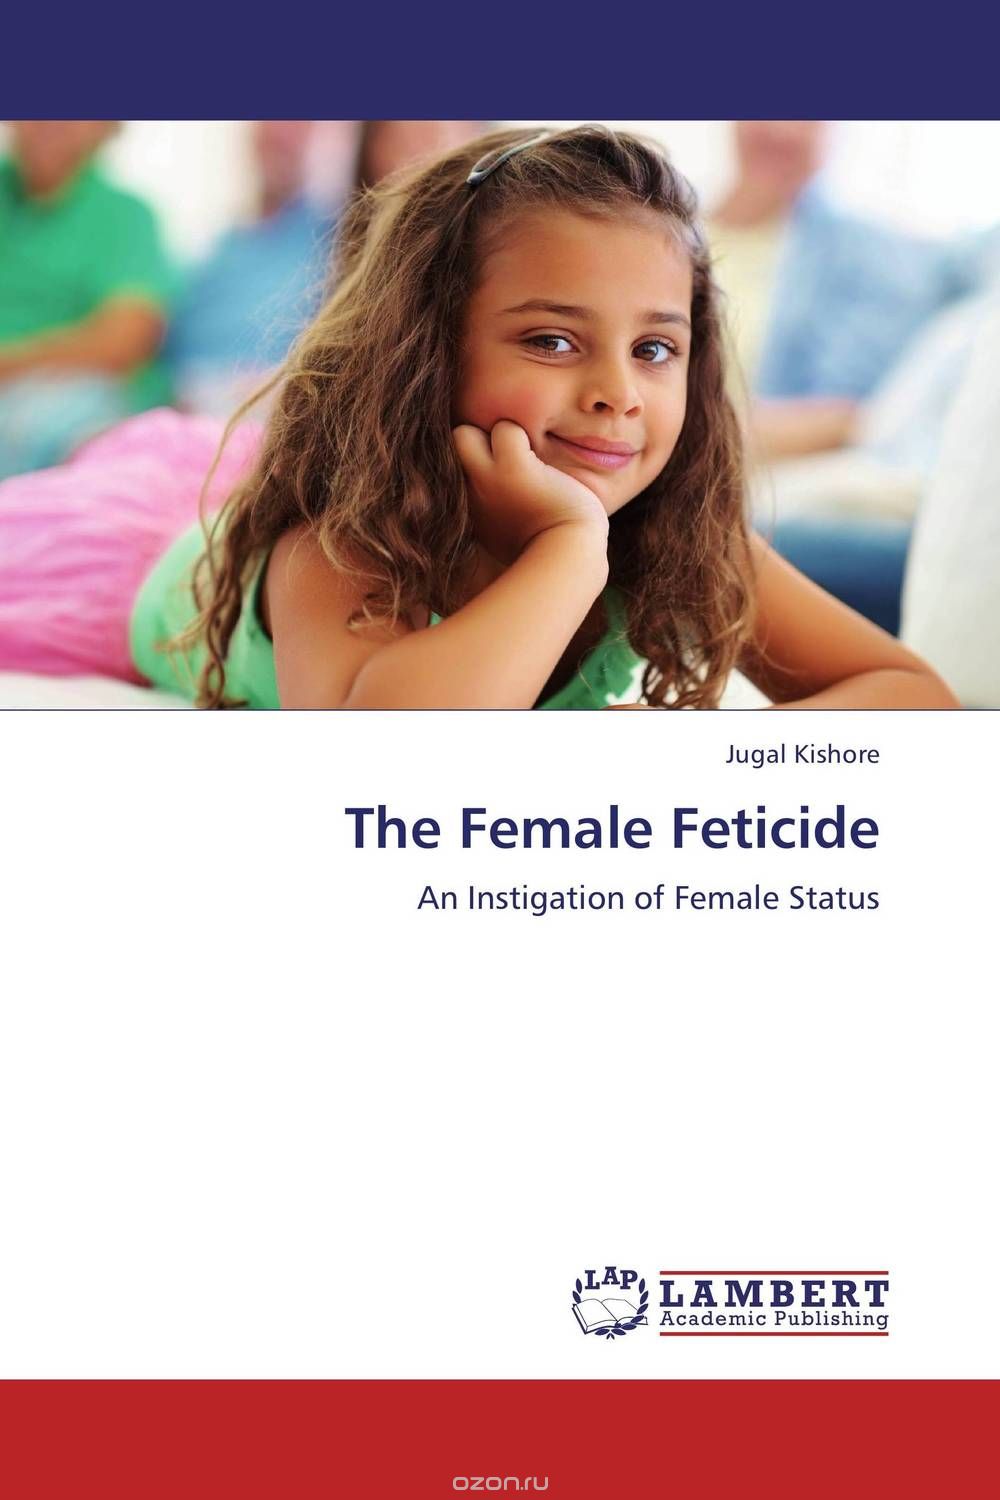 Скачать книгу "The Female Feticide"